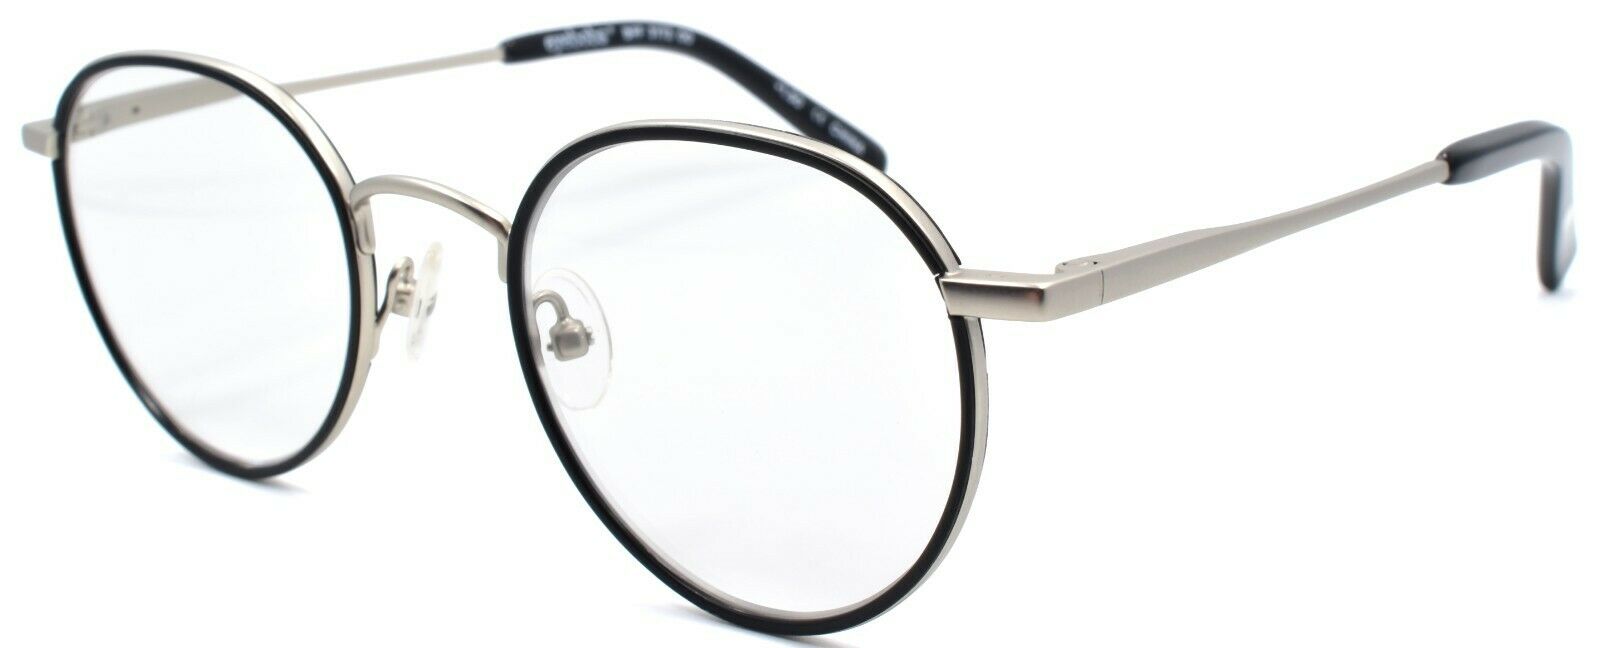 1-Eyebobs BFF 3173 00 Unisex Reading Glasses Black / Silver +1.50-842754169349-IKSpecs